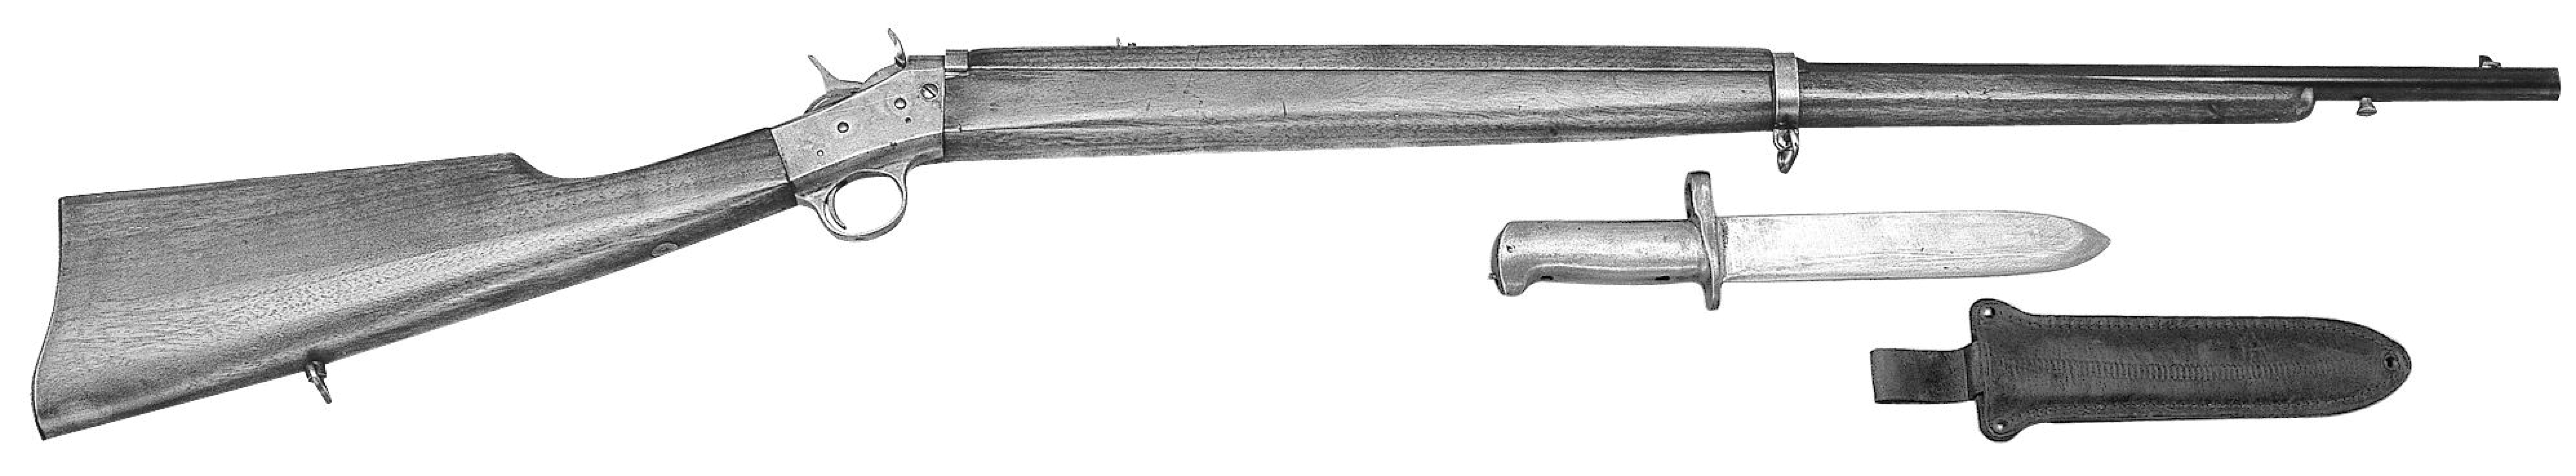 No. 4 S Military Rifle